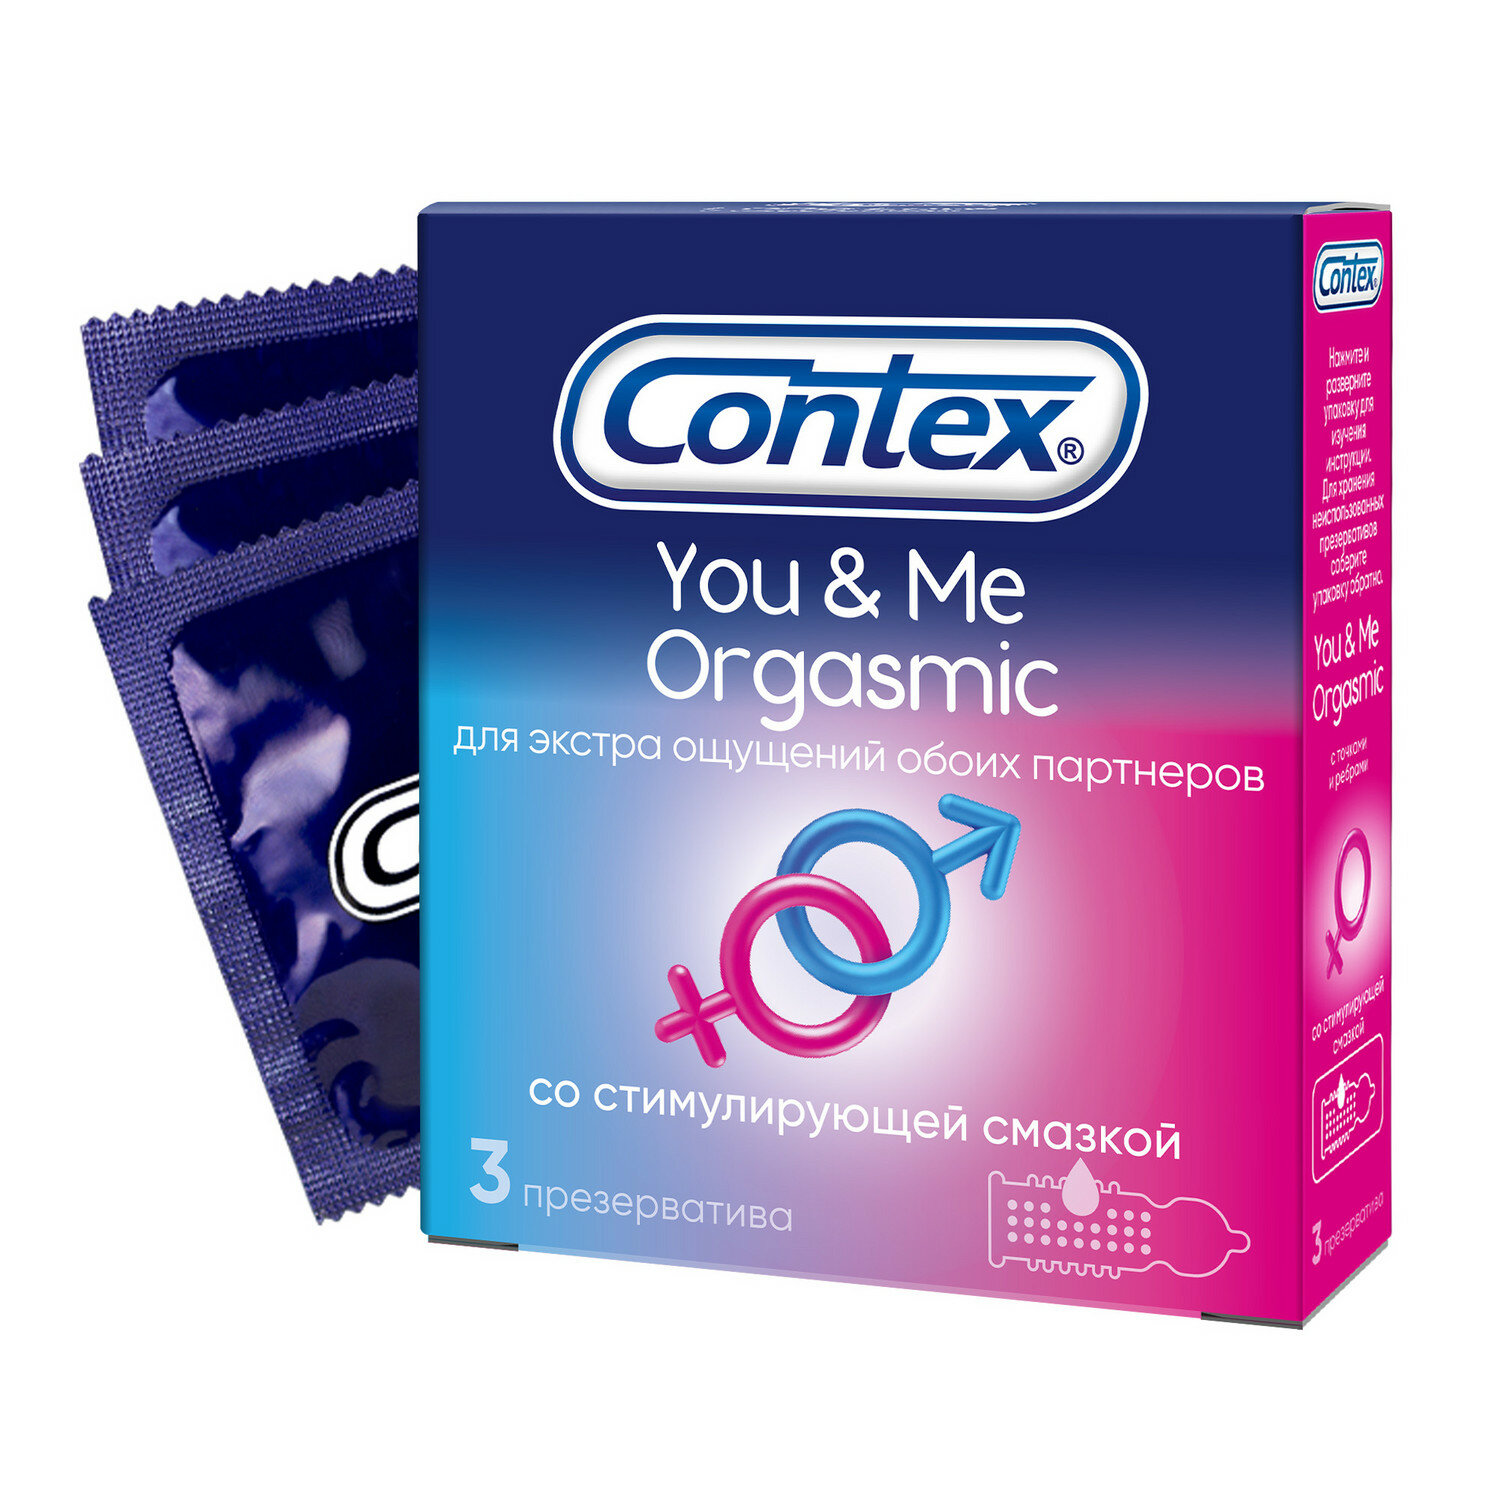 Contex You&Me Orgasmic Презервативы с ребрами и точками, 3 шт